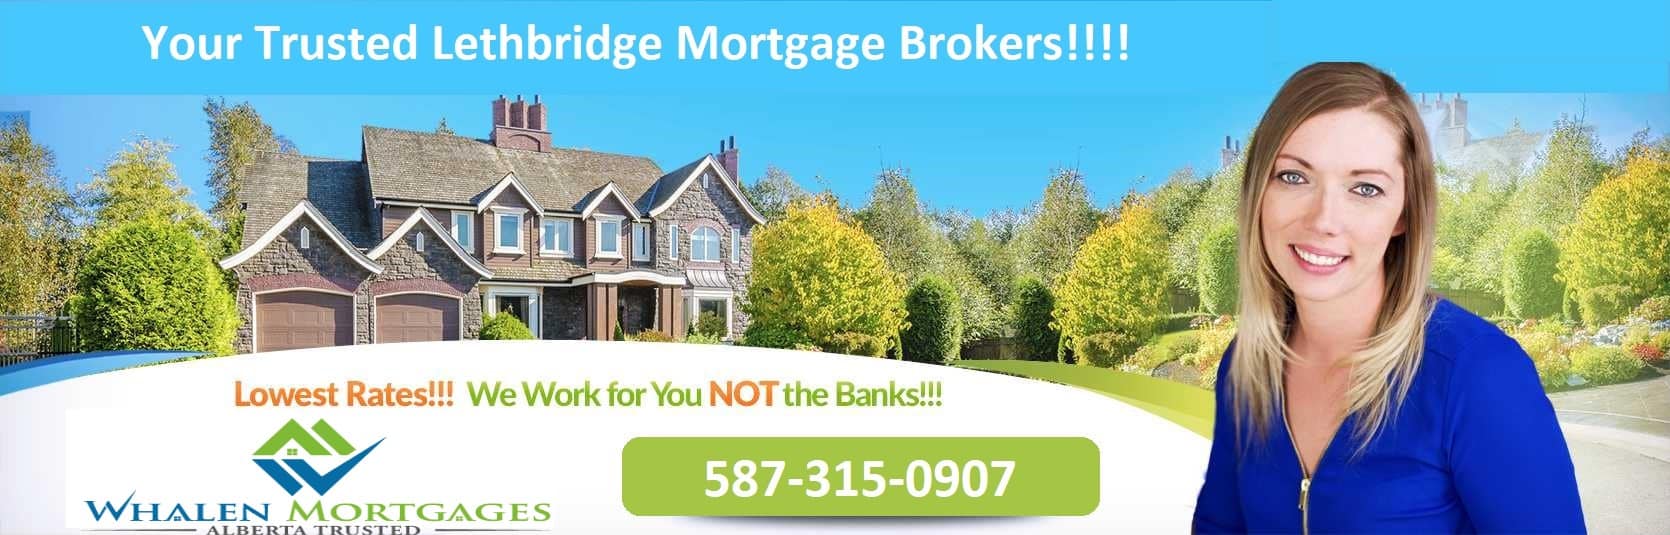 Lethbridge Mortgage Broker : Low Rates